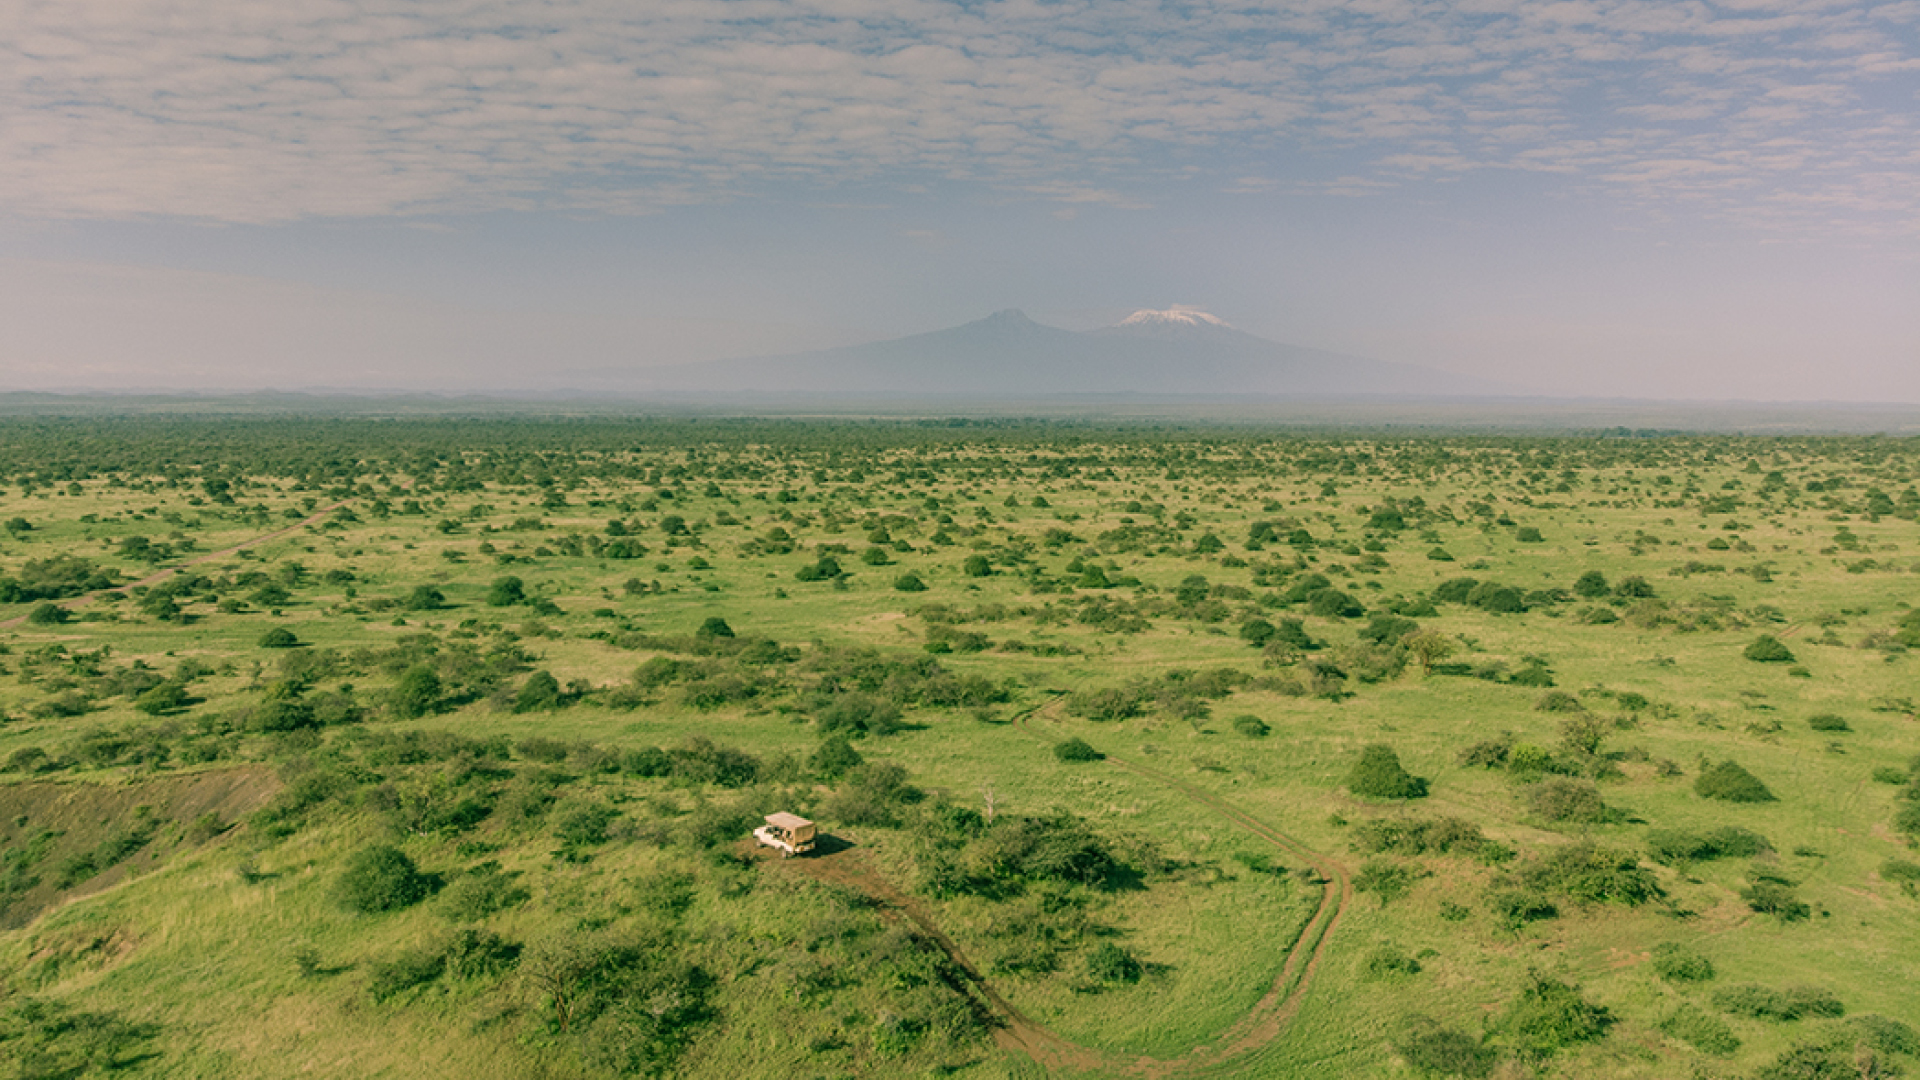 Ariel shot of Tsavo West National Park in Kenya